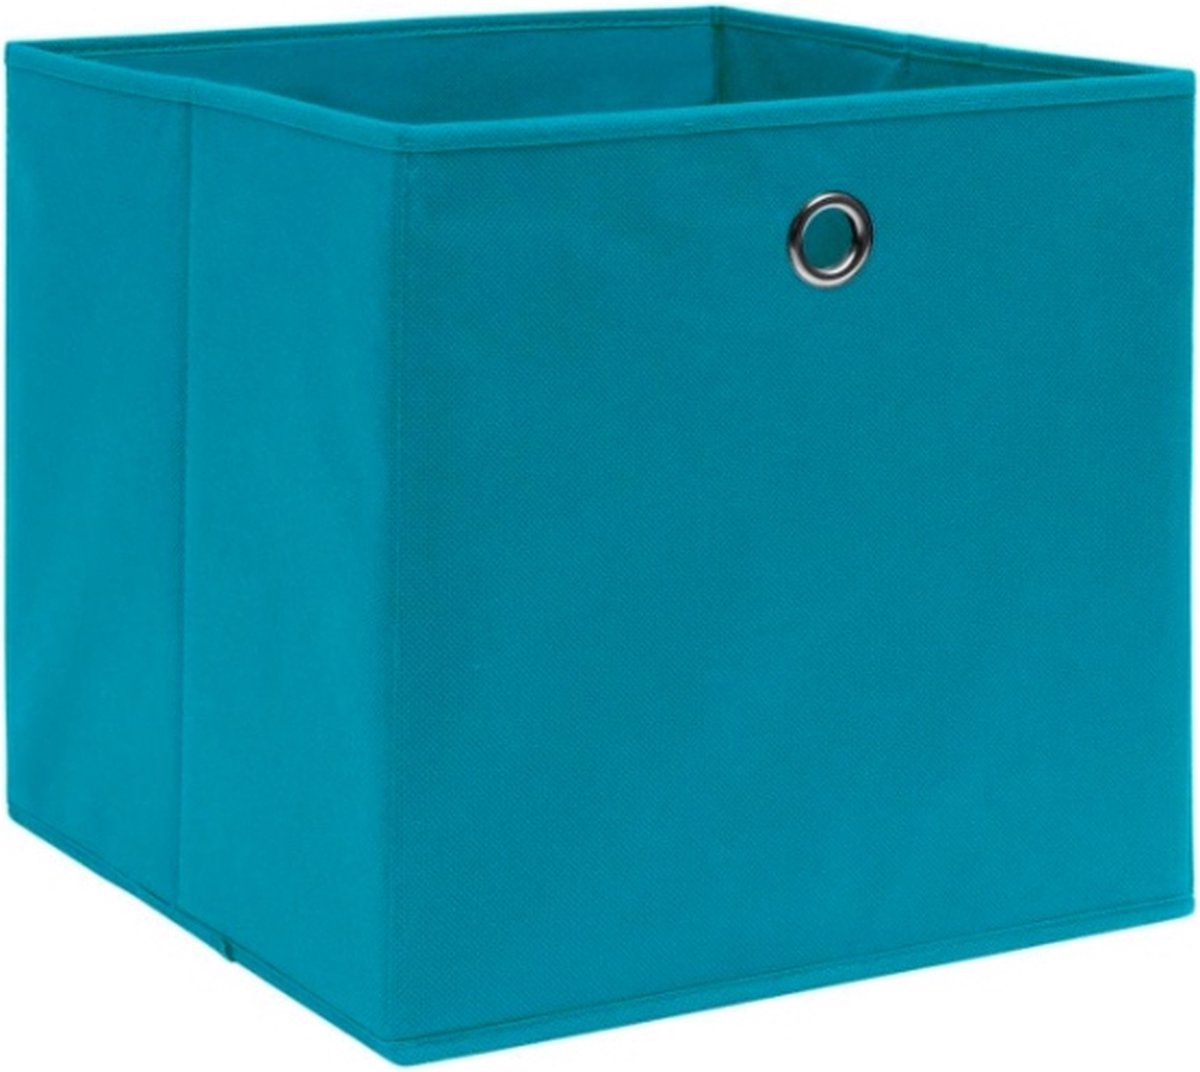 YUNICS® Opbergdoos - Opbergbox - Turquoise - 30x30 cm - Opbergboxen - Organizer - Organizer Kast